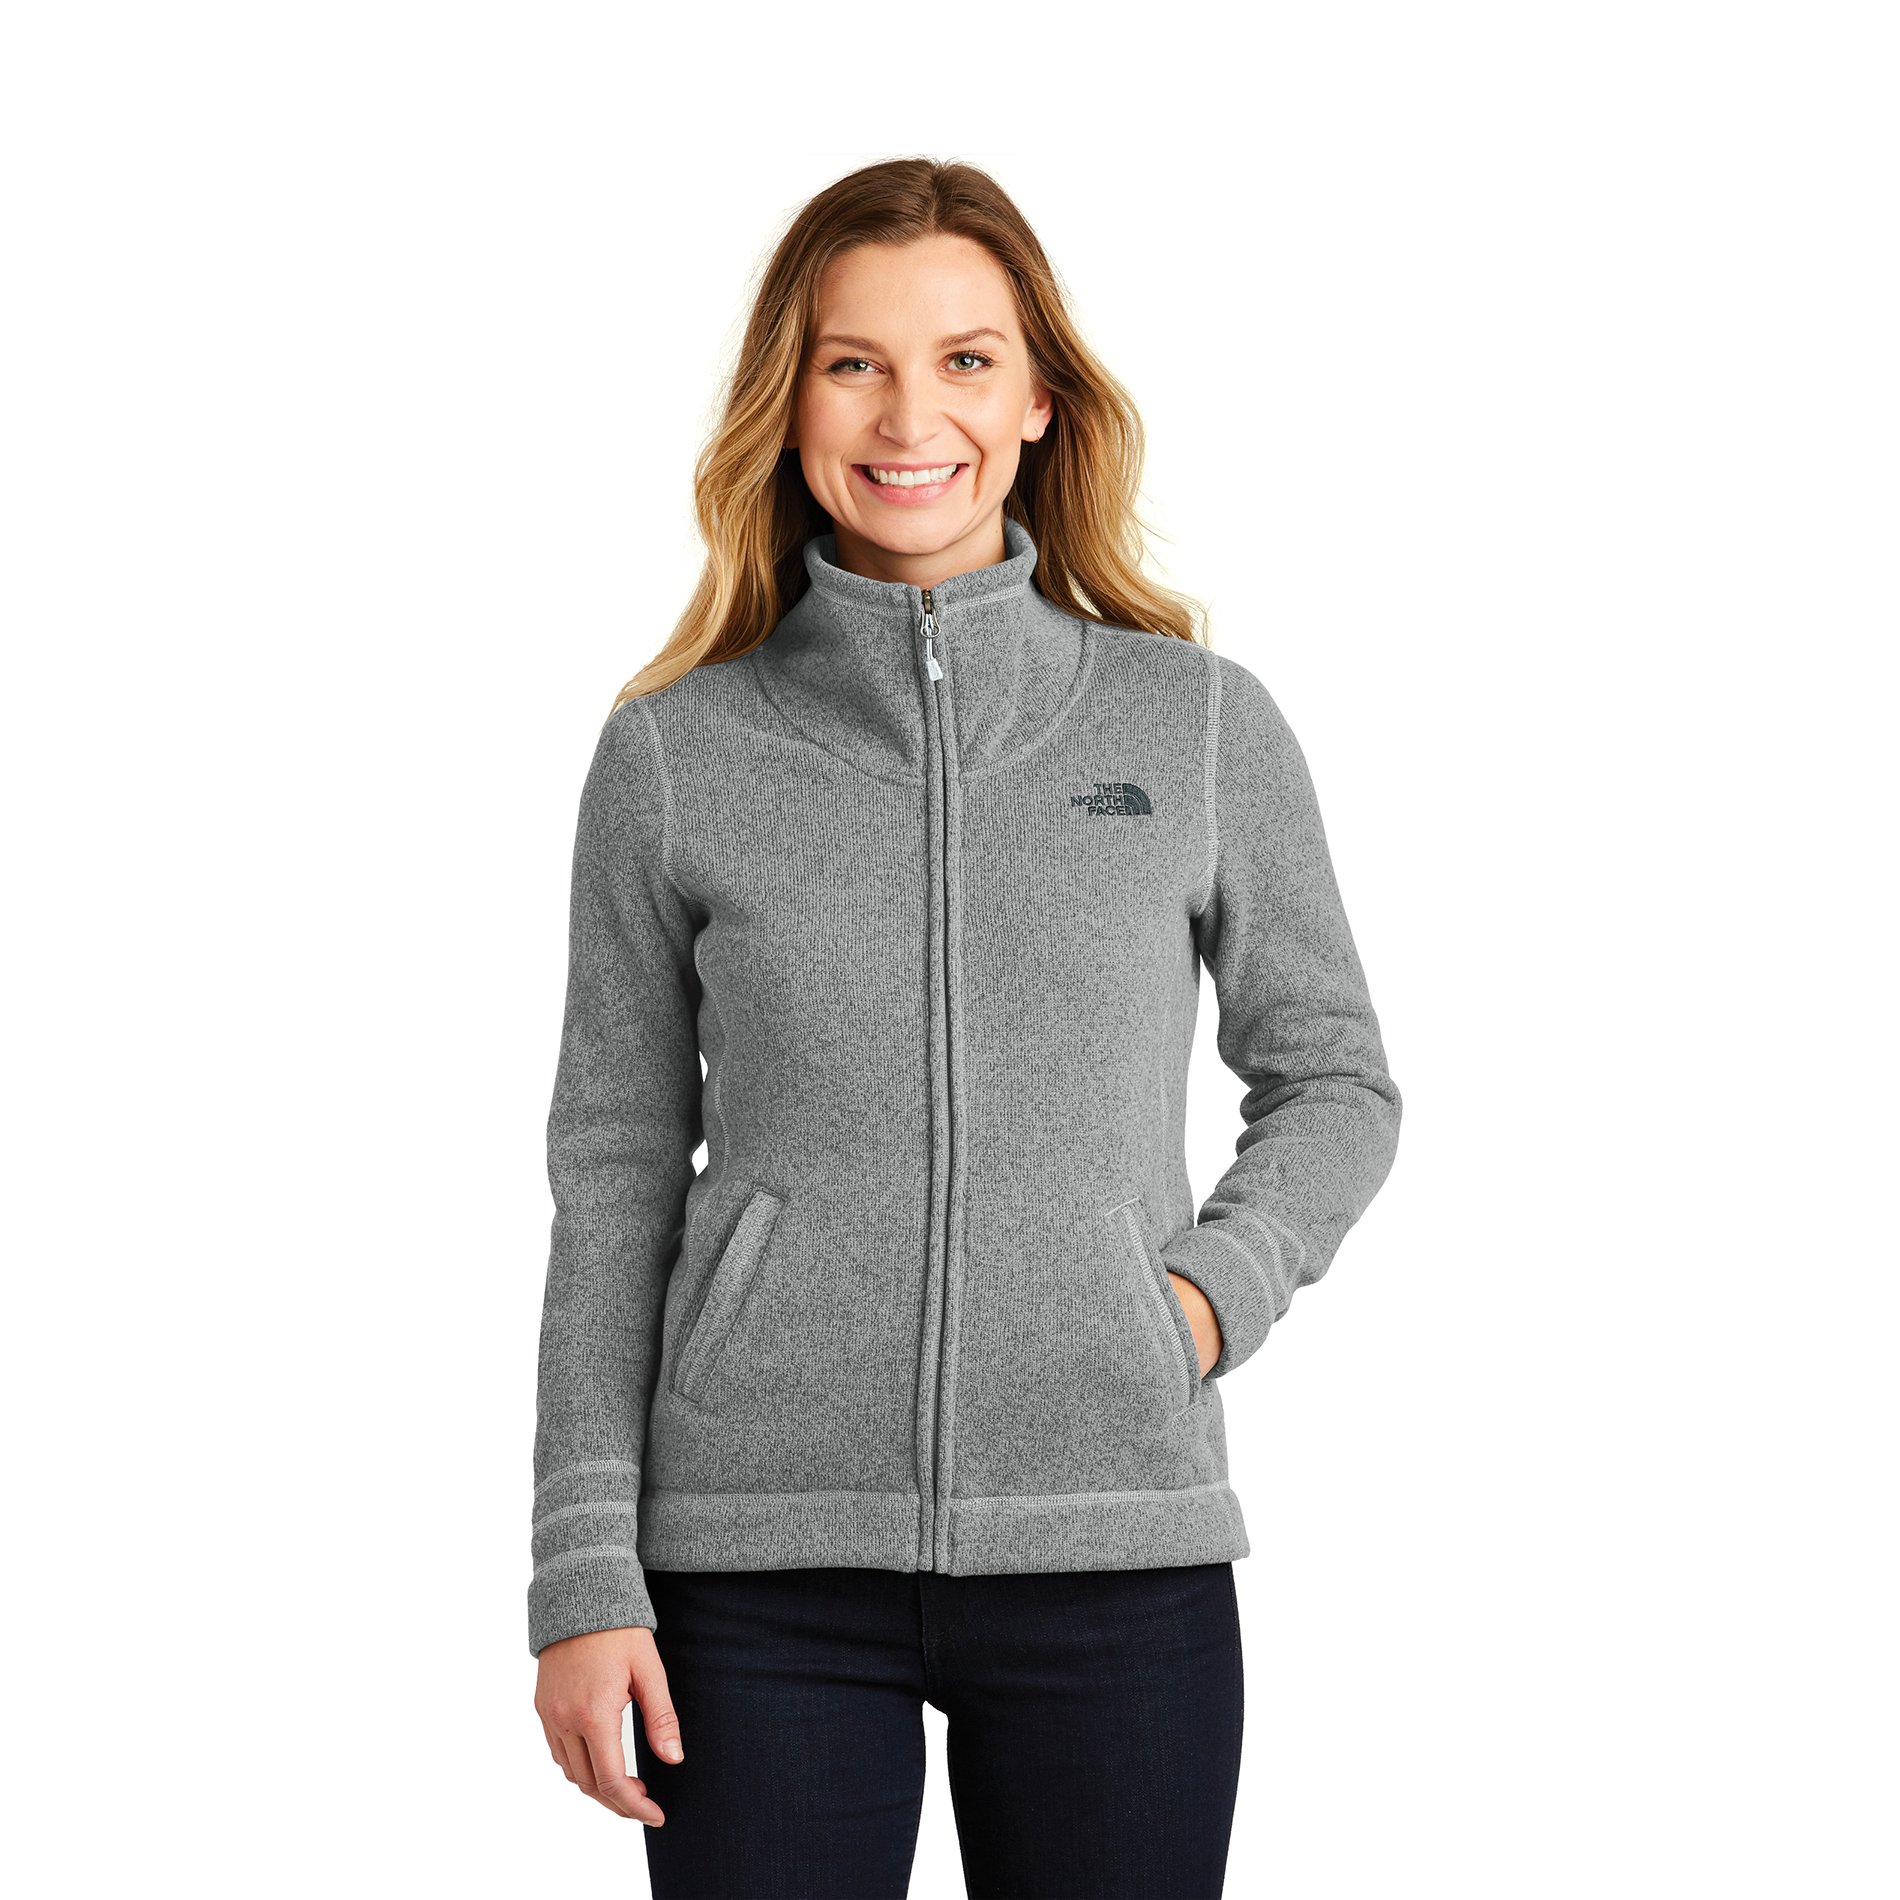 Customized The North Face Sweater Fleece Jacket (Women's